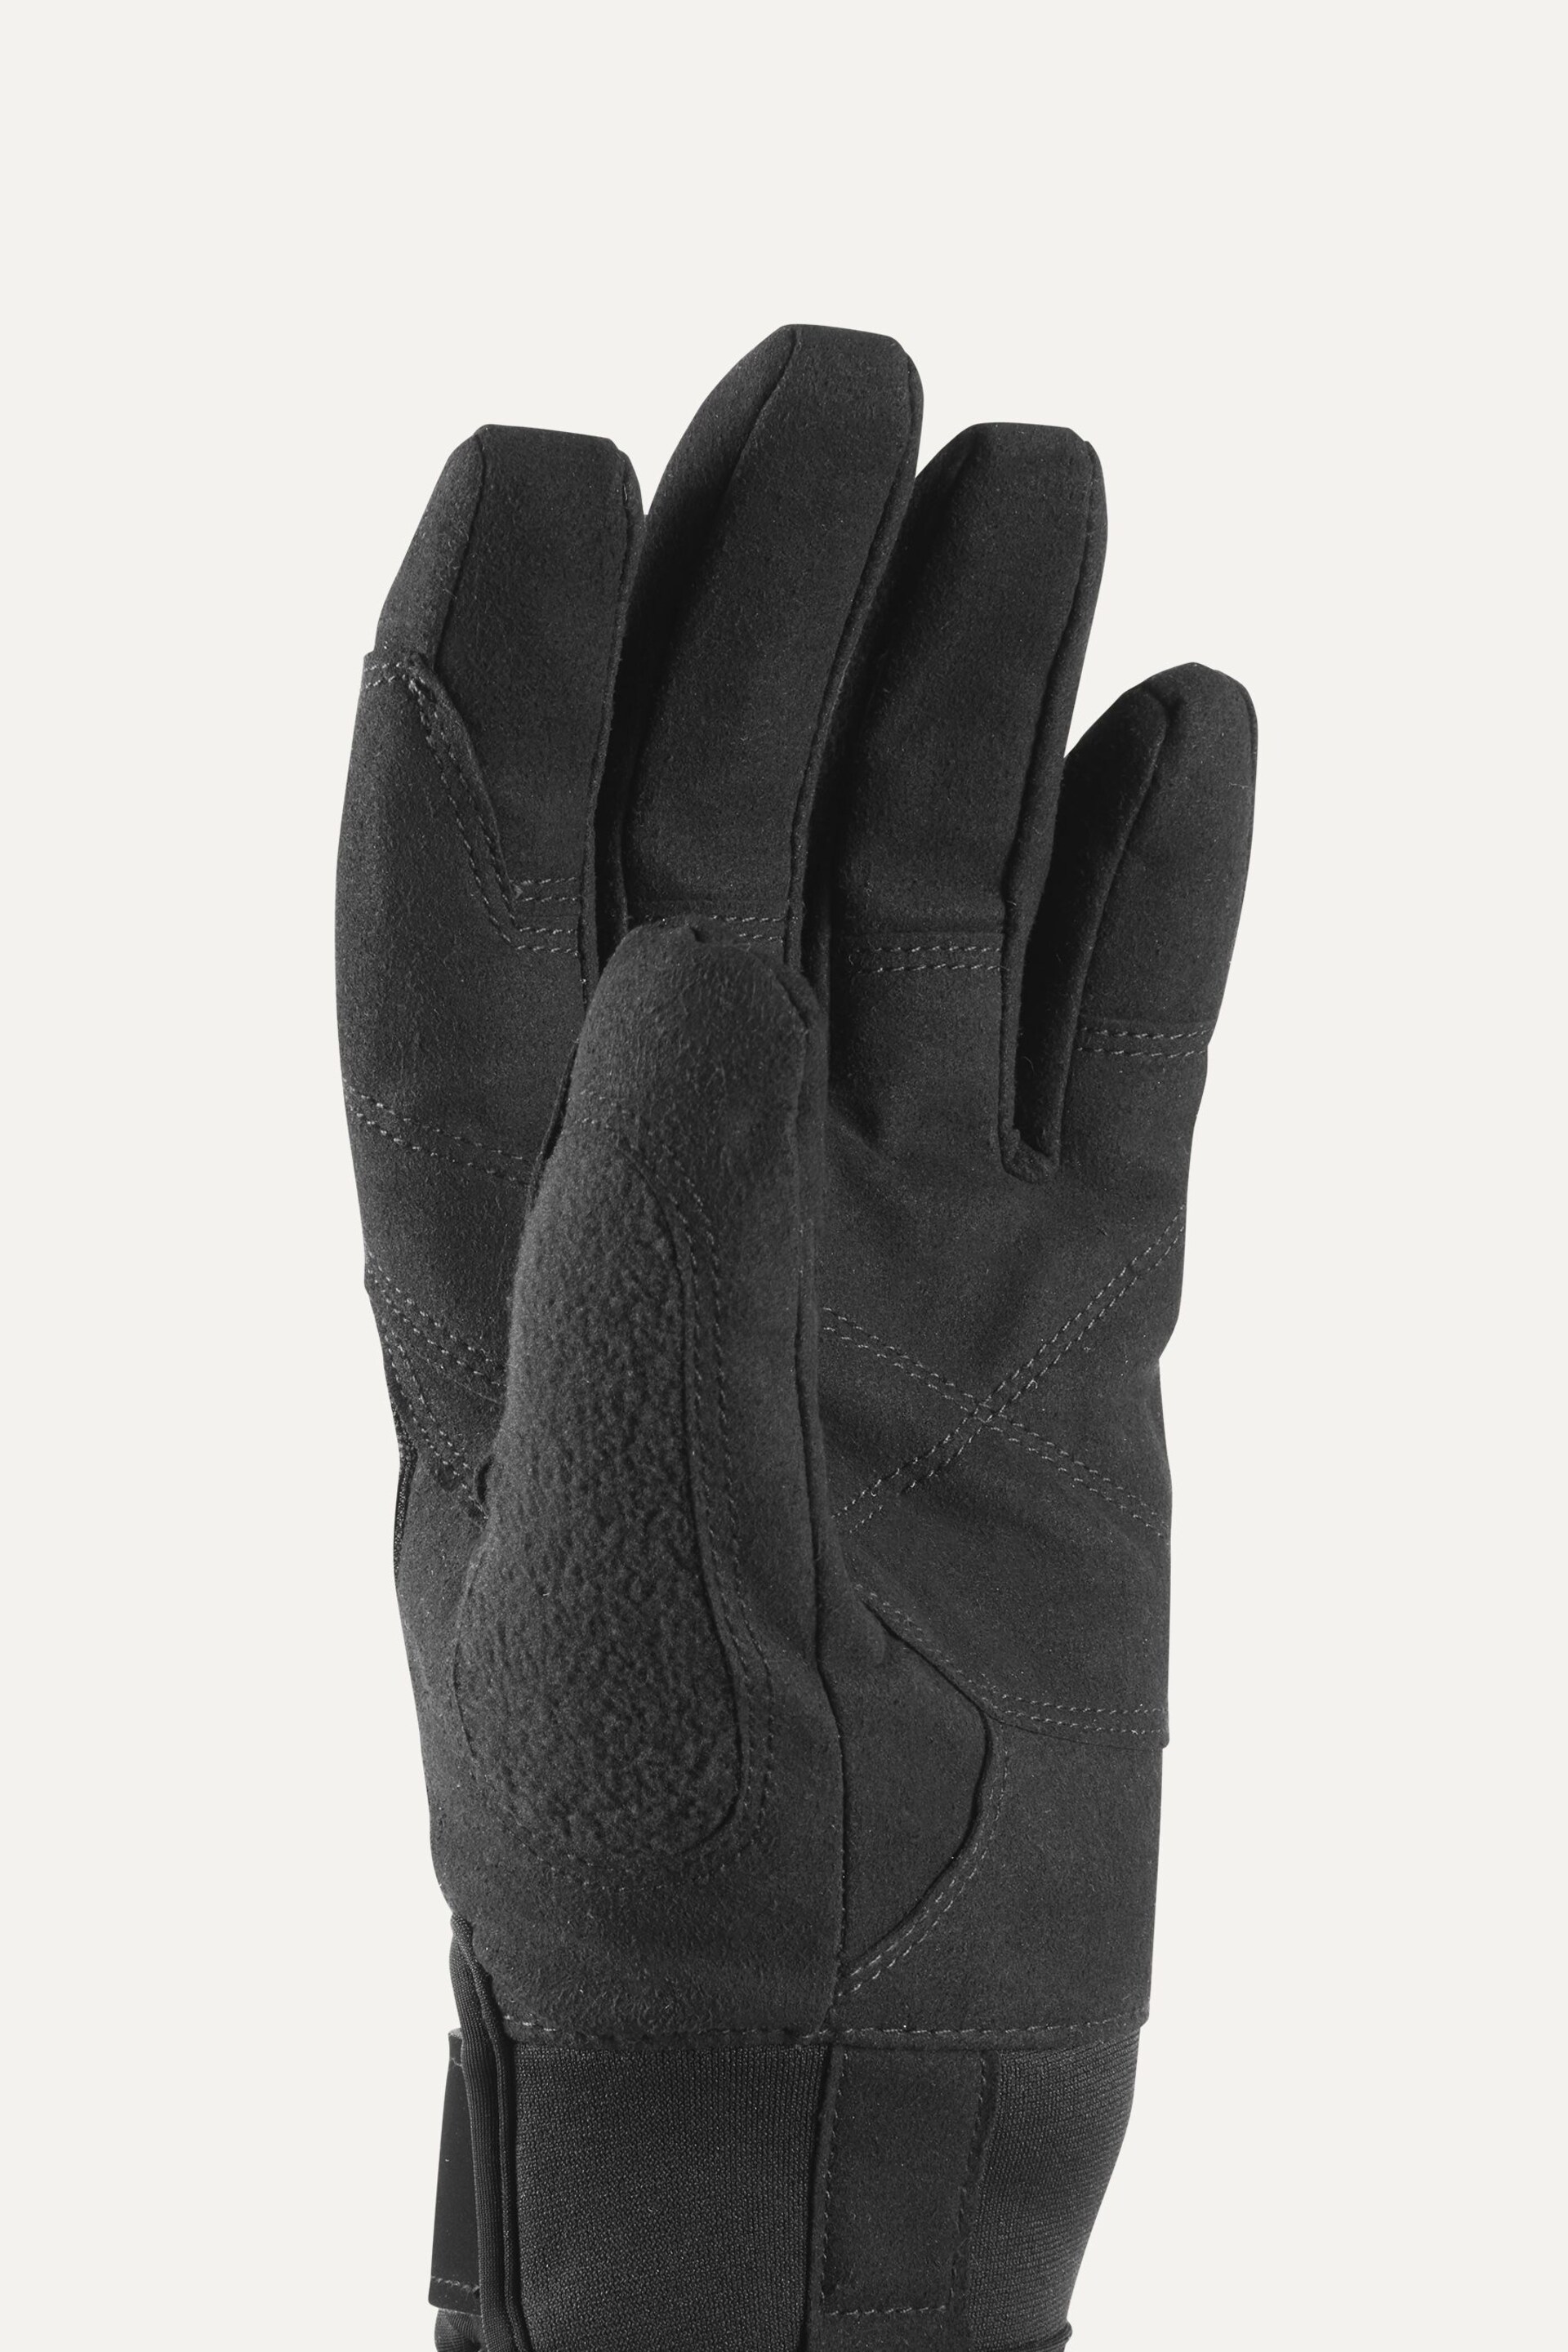 Sealskinz Harling Waterproof All Weather Black Gloves - Image 3 of 3